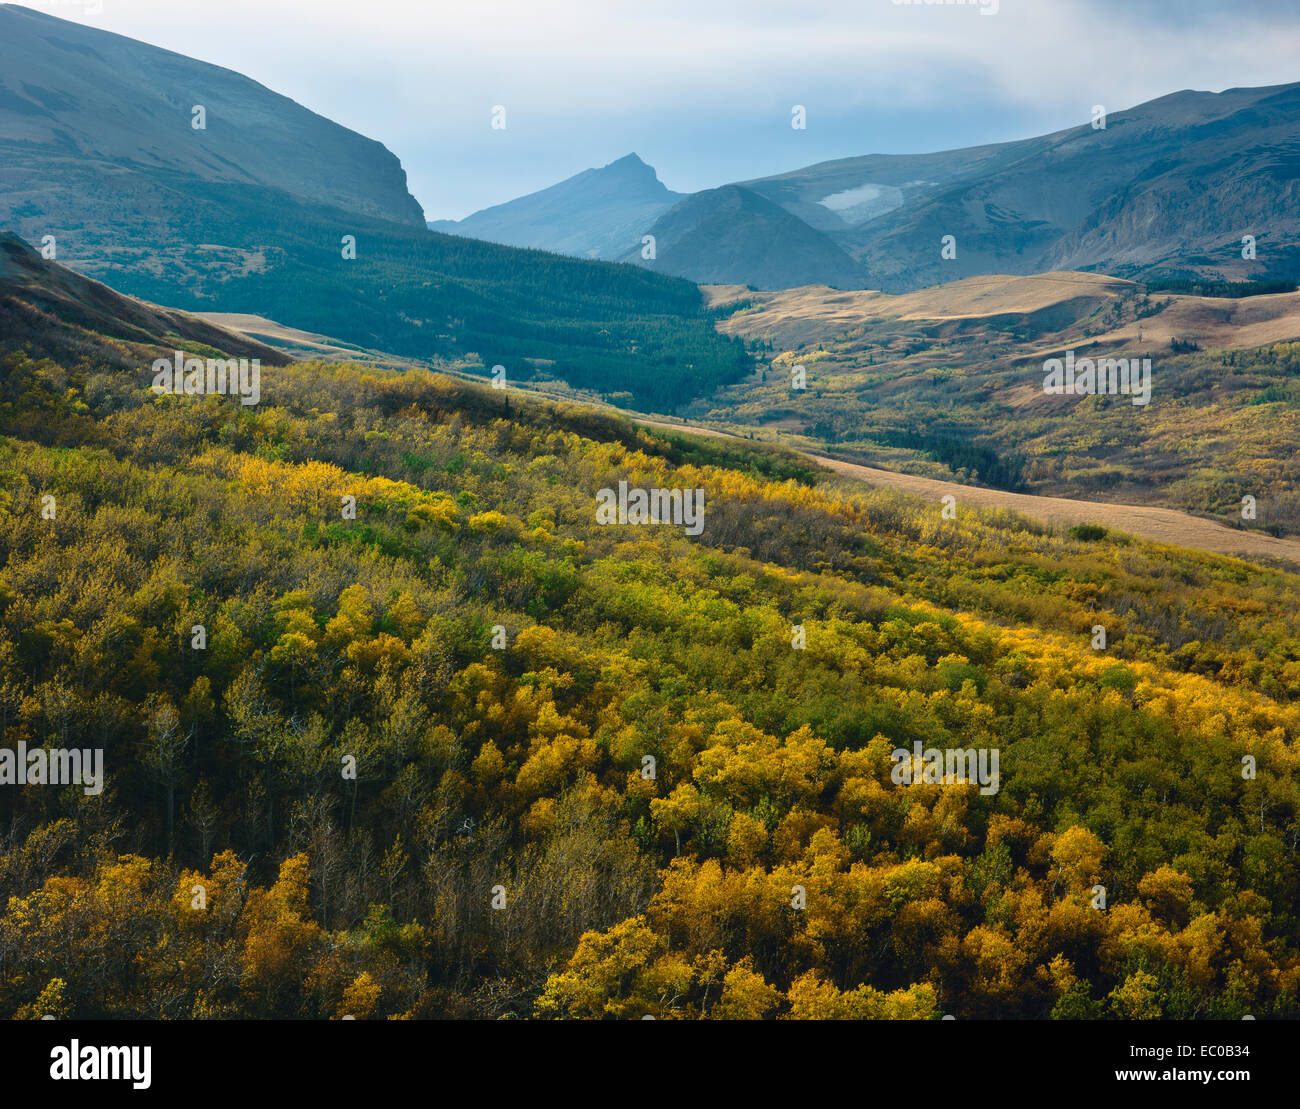 Aspens in fall color blanket hillsides beneath peaks on Hudson Bay Divide near Glacier National Park, Montana Stock Photo